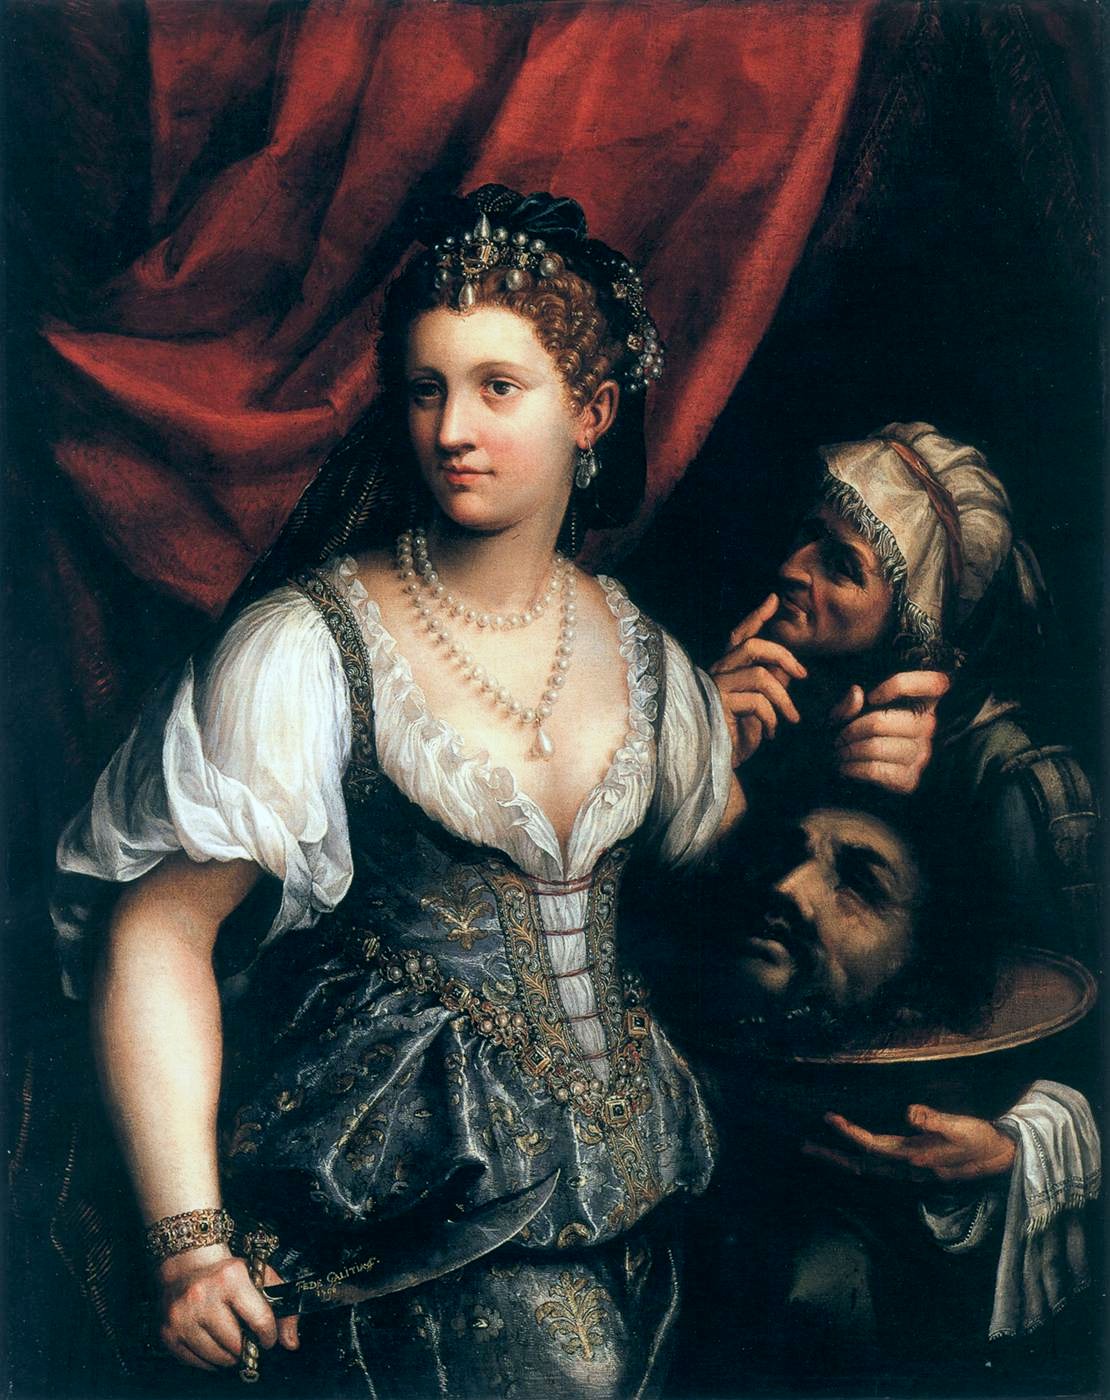 hoạ sĩ nổi tiếng 2 - Judith with the Head of Holofernes 1596 - elleman